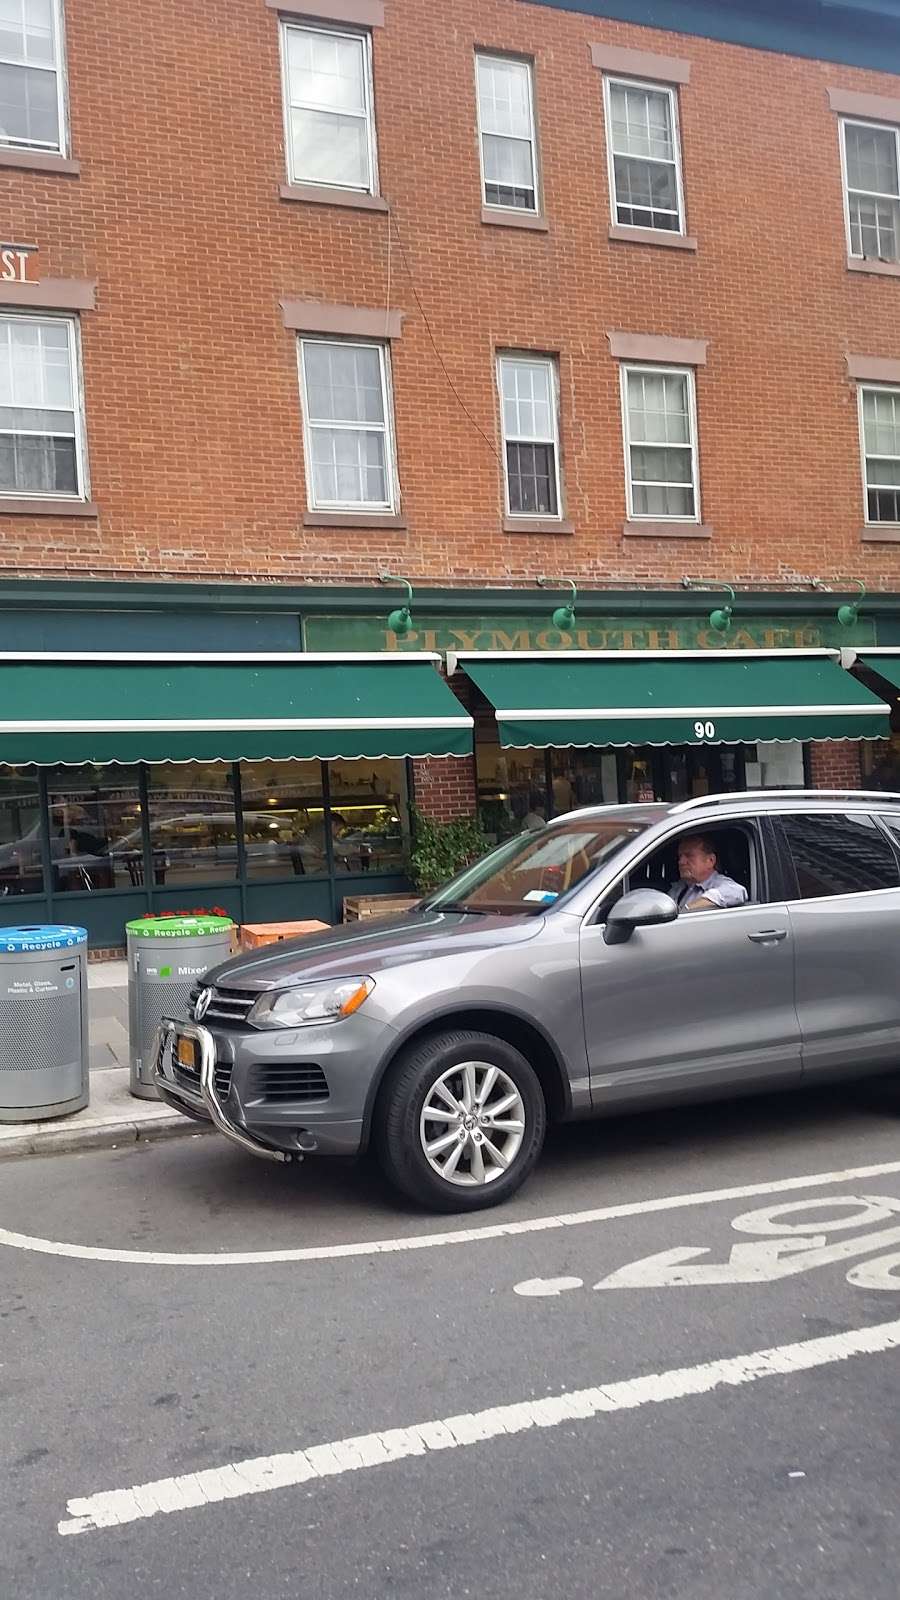 Plymouth Cafe | Photo 9 of 10 | Address: 90 Henry St, Brooklyn, NY 11201, USA | Phone: (718) 624-0074